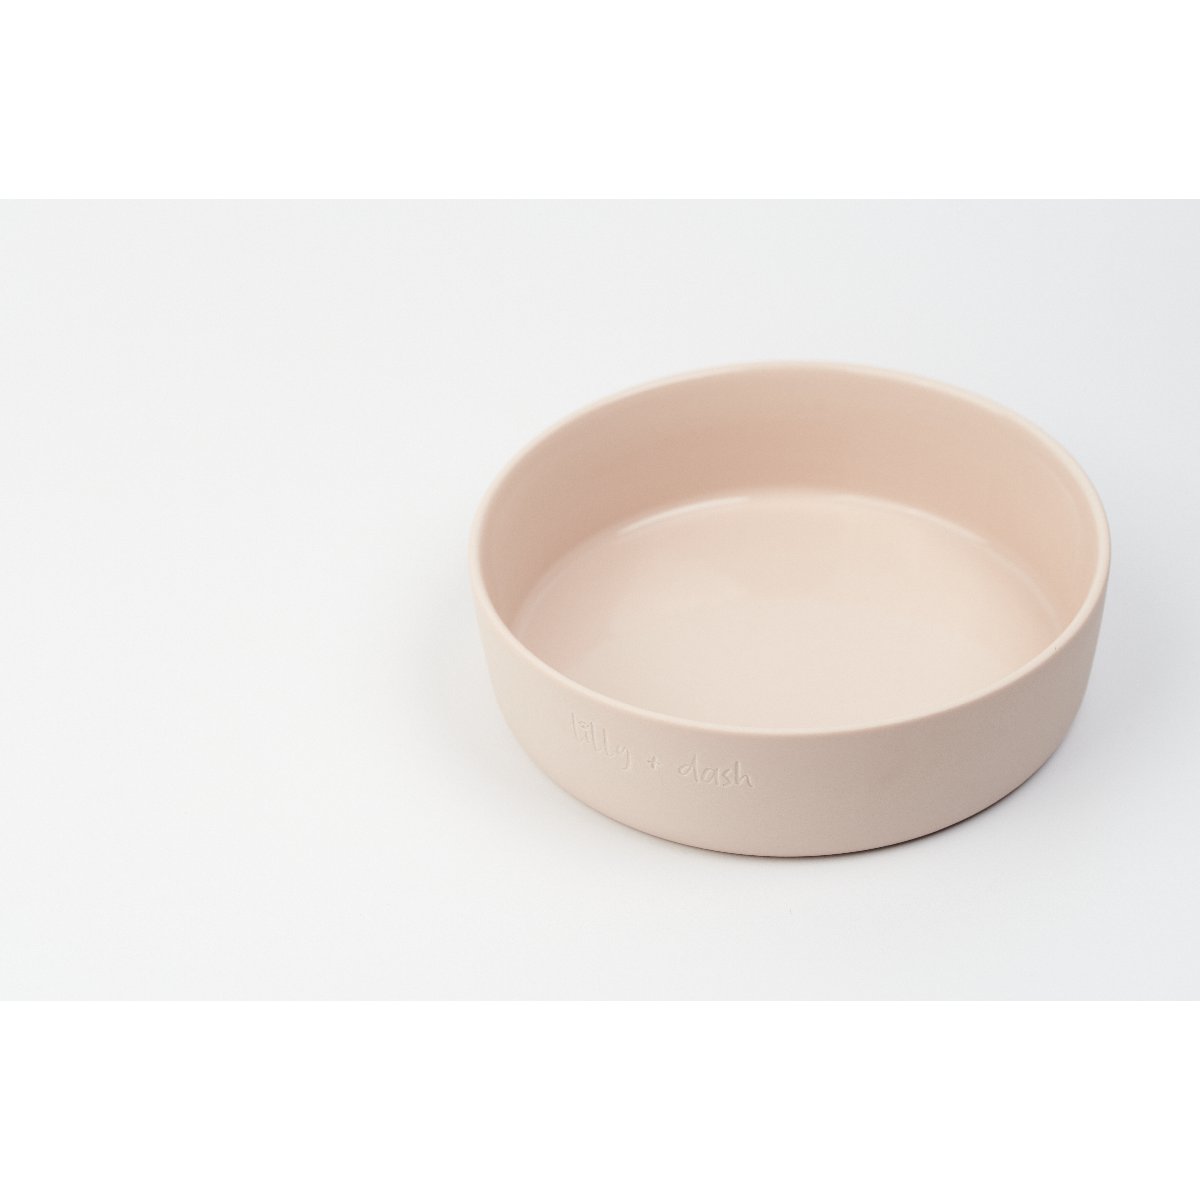 mondocherry - Lilly + Dash | ceramic dog bowl | pink - close